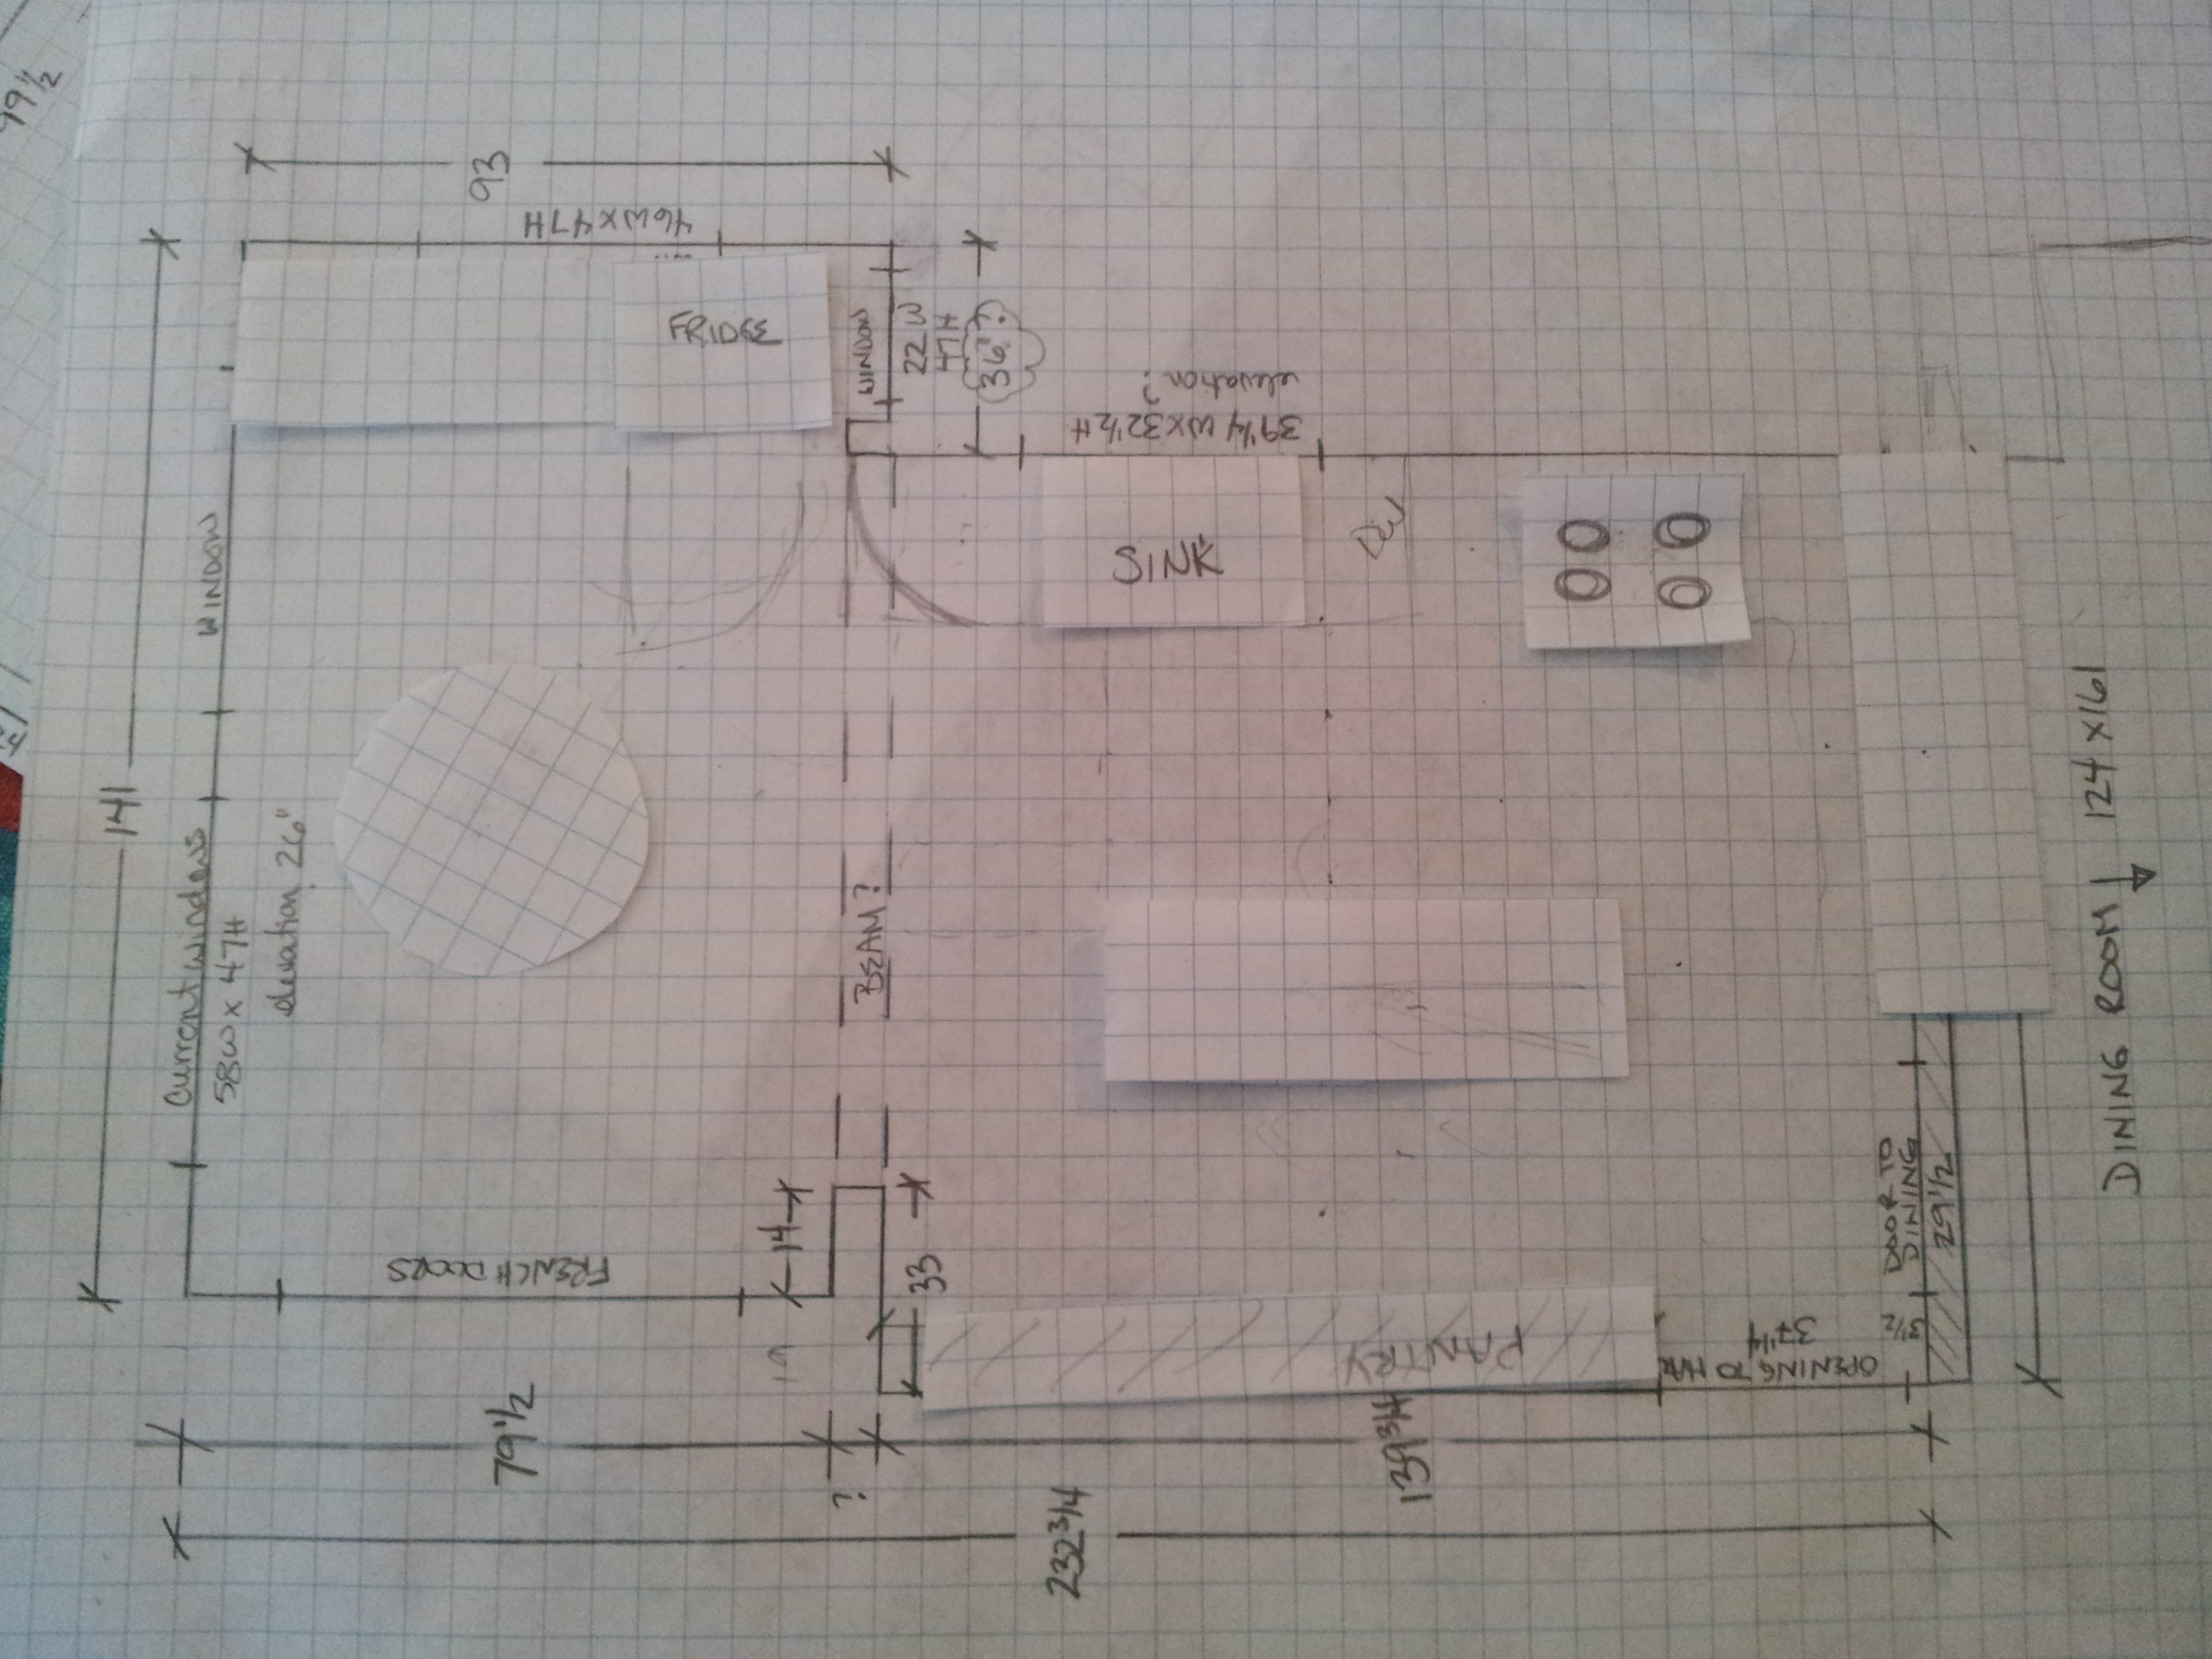 Kitchen layout on grid paper